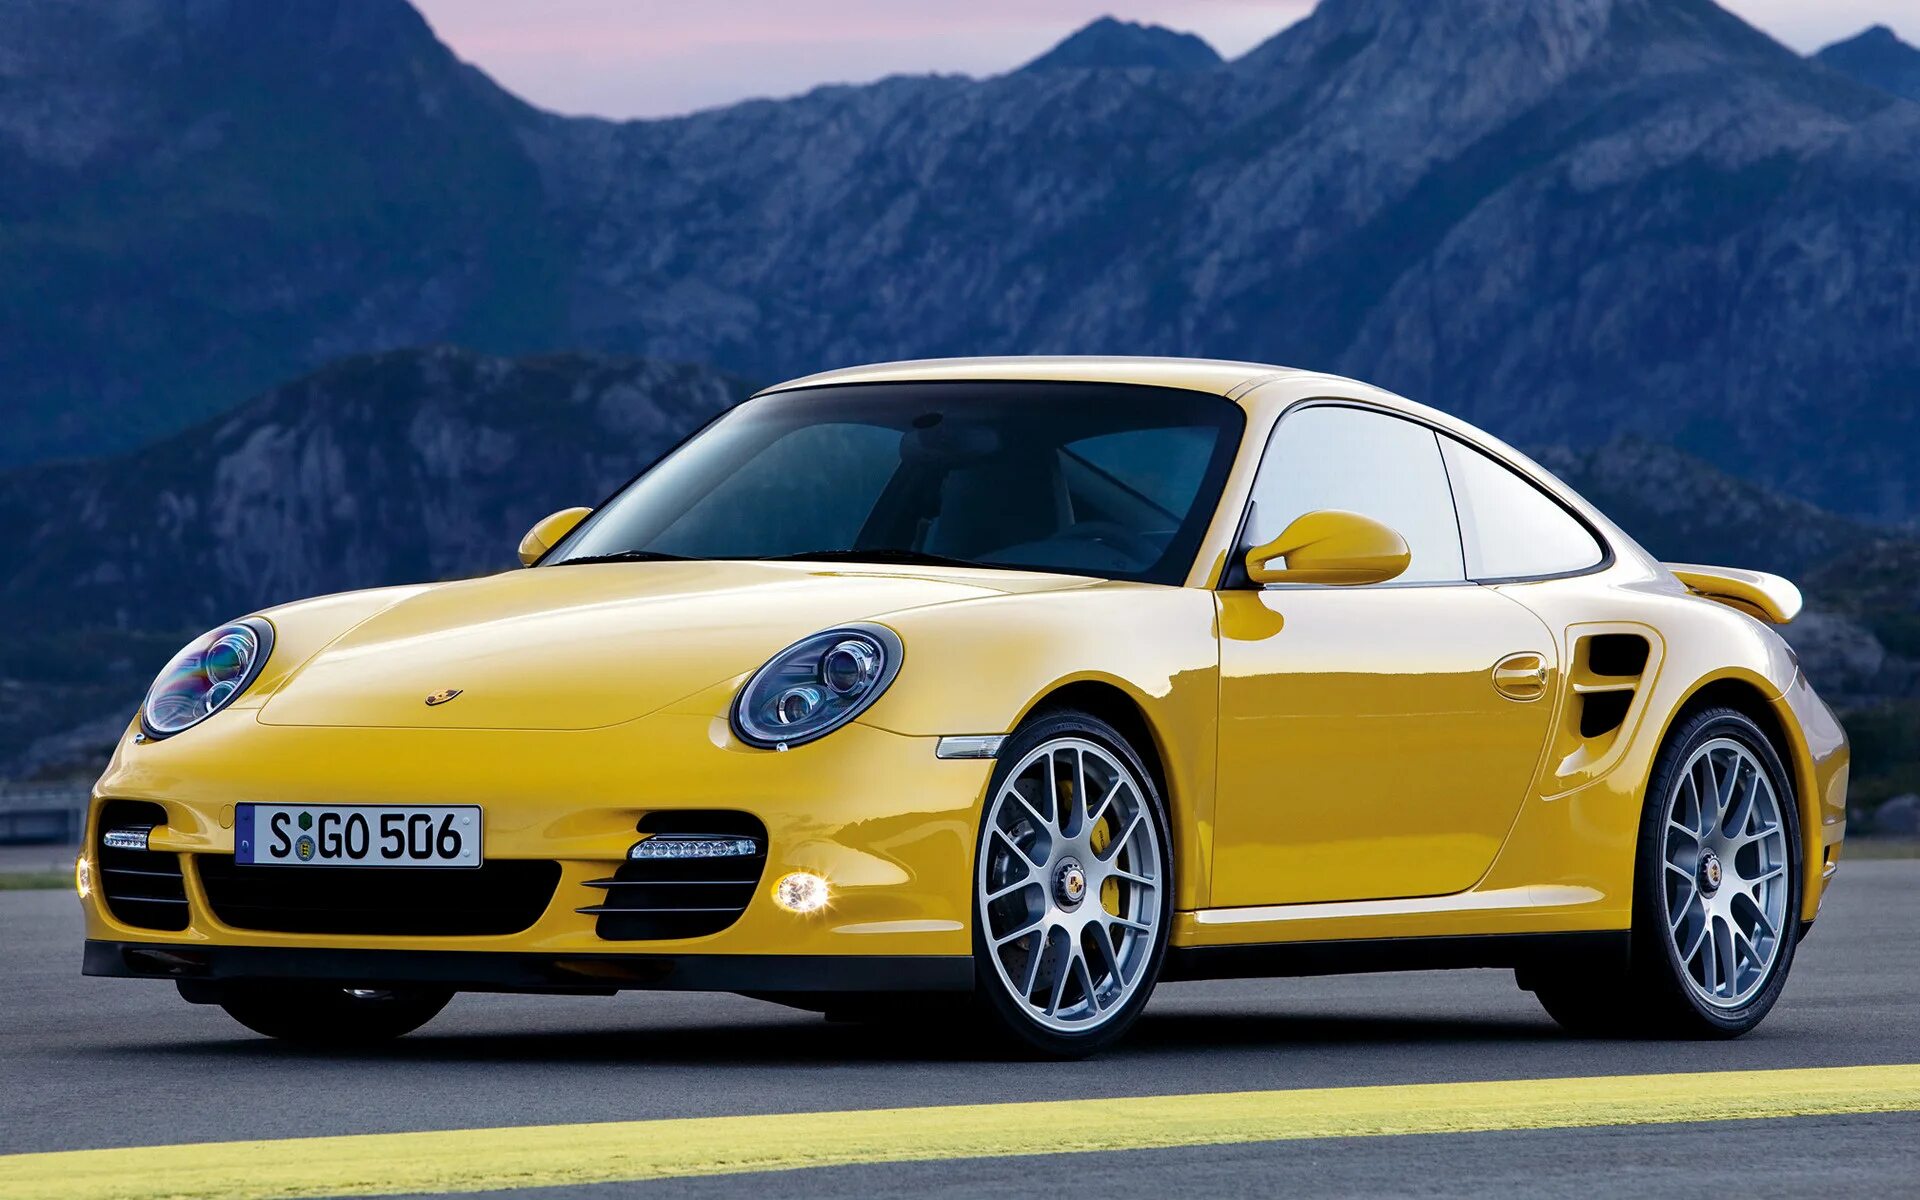 Порше 911 турбо с. Порше 911 турбо 2009. Порше 911 желтый. Porsche 911 Turbo.